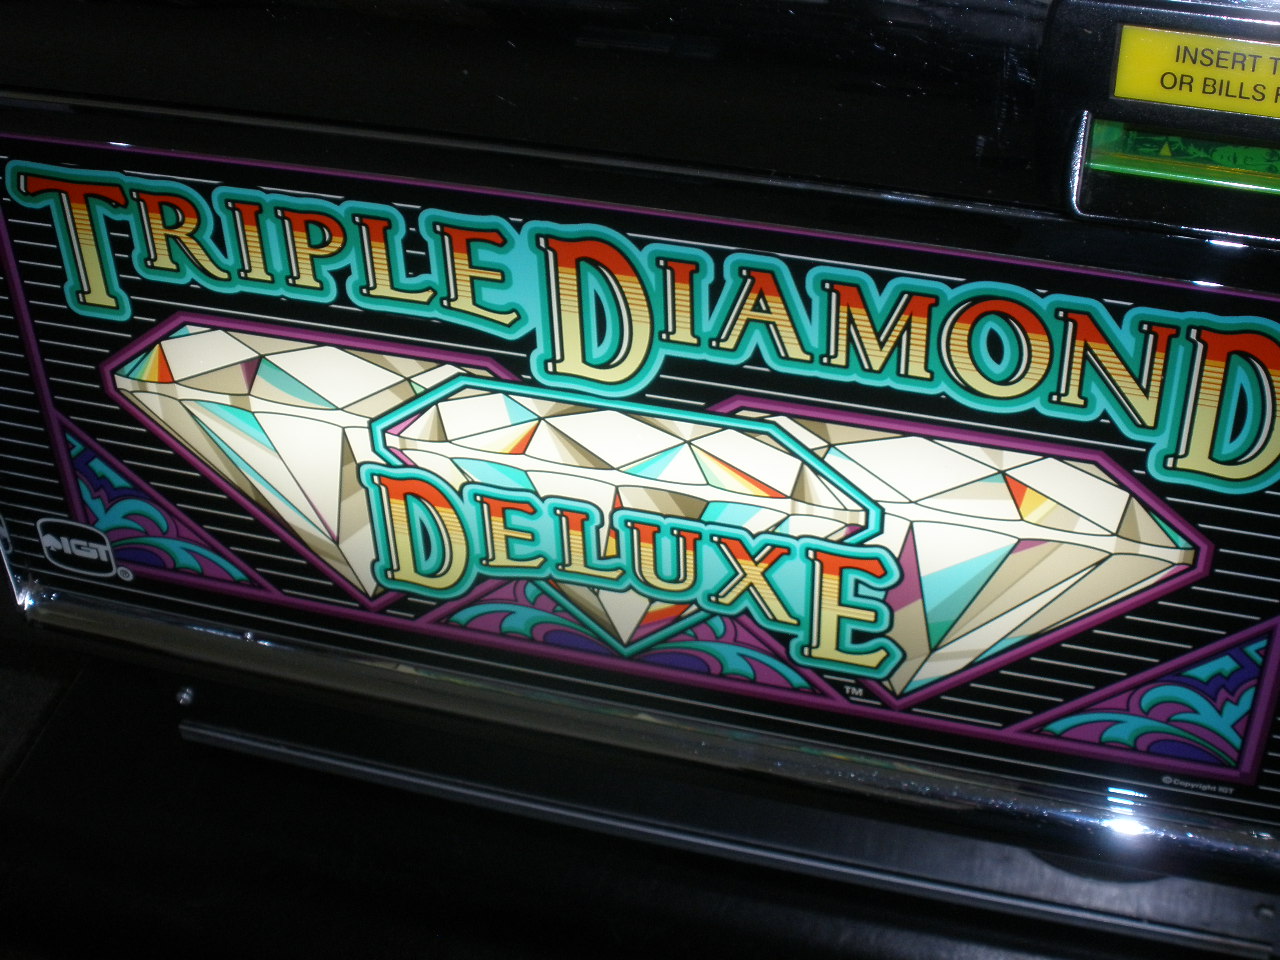 triple diamond deluxe slot machine